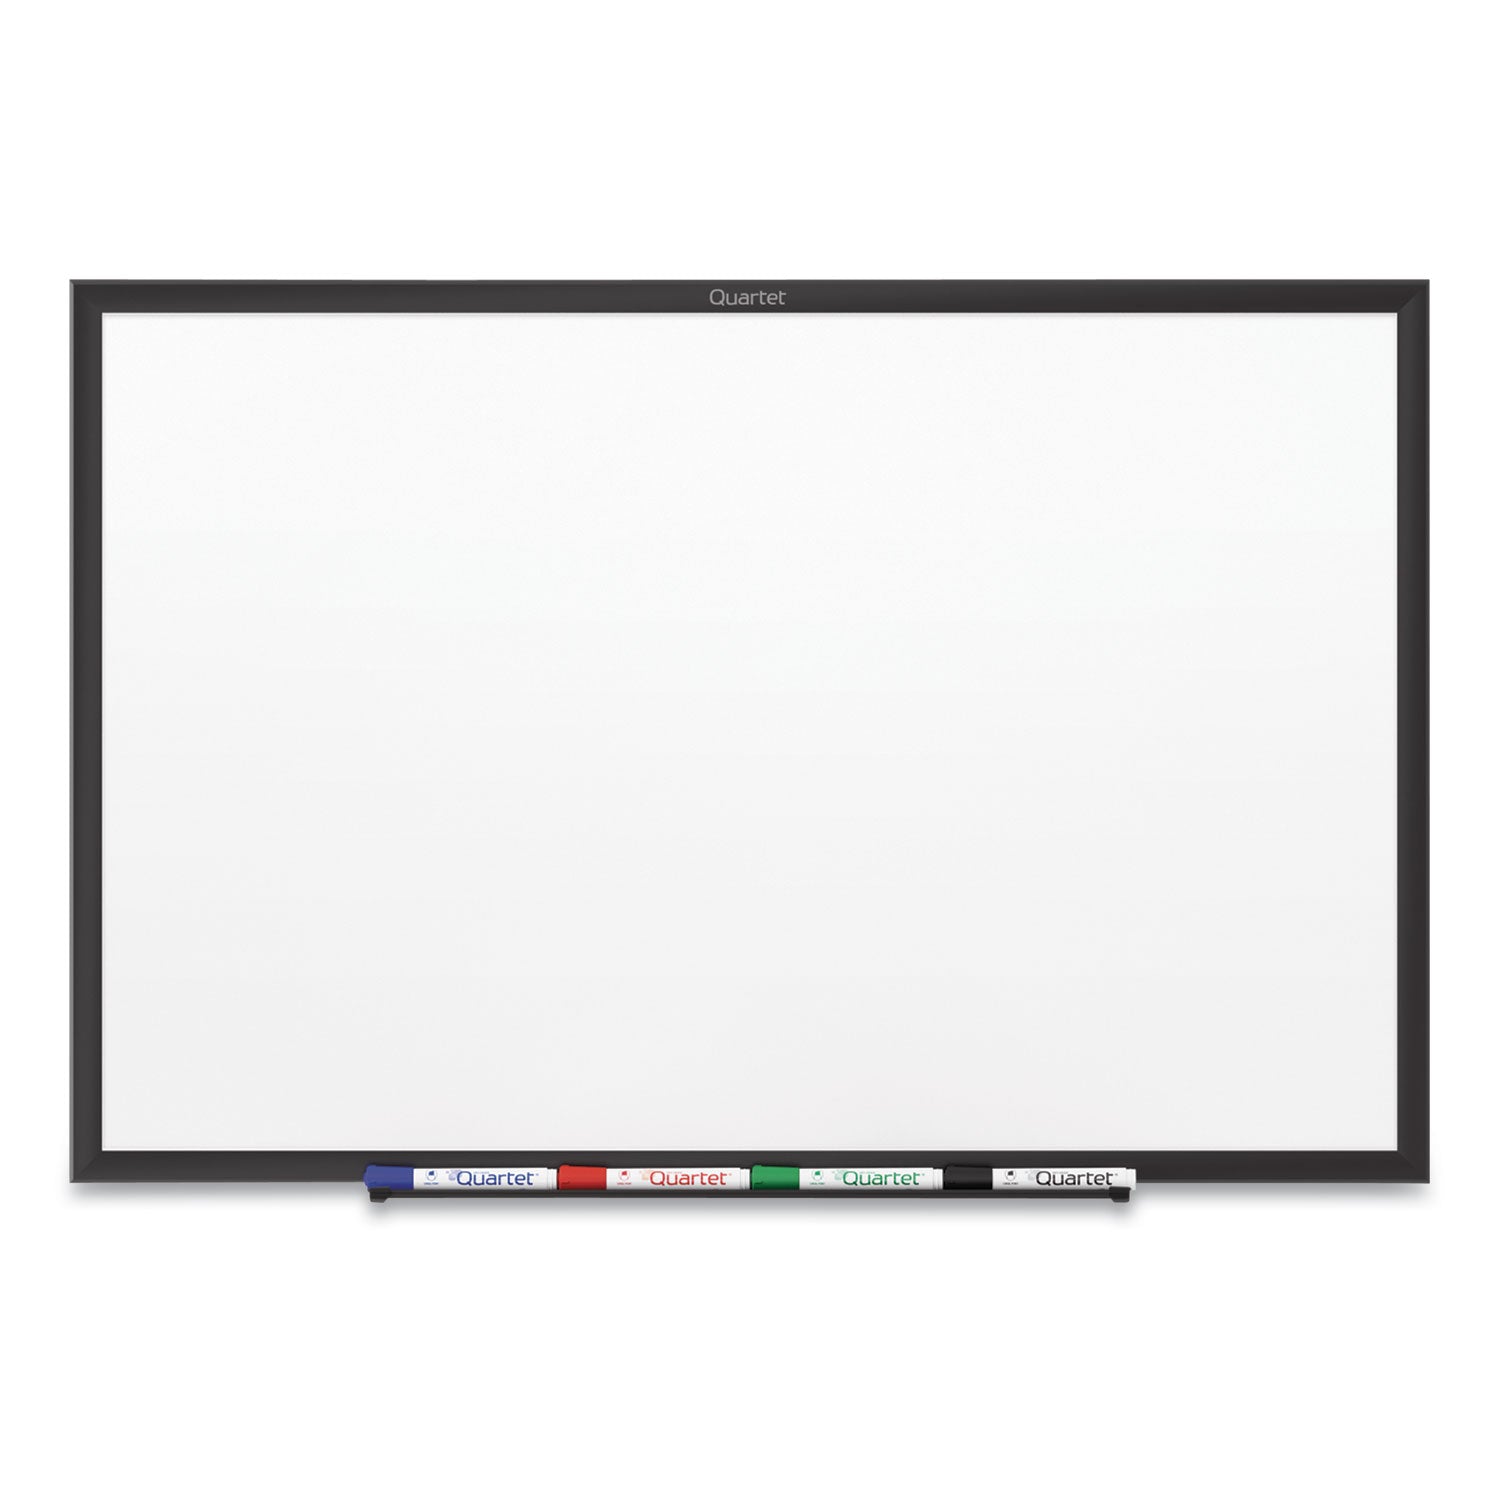 Classic Series Nano-Clean Dry Erase Board, 36 x 24, White Surface, Black Aluminum Frame - 